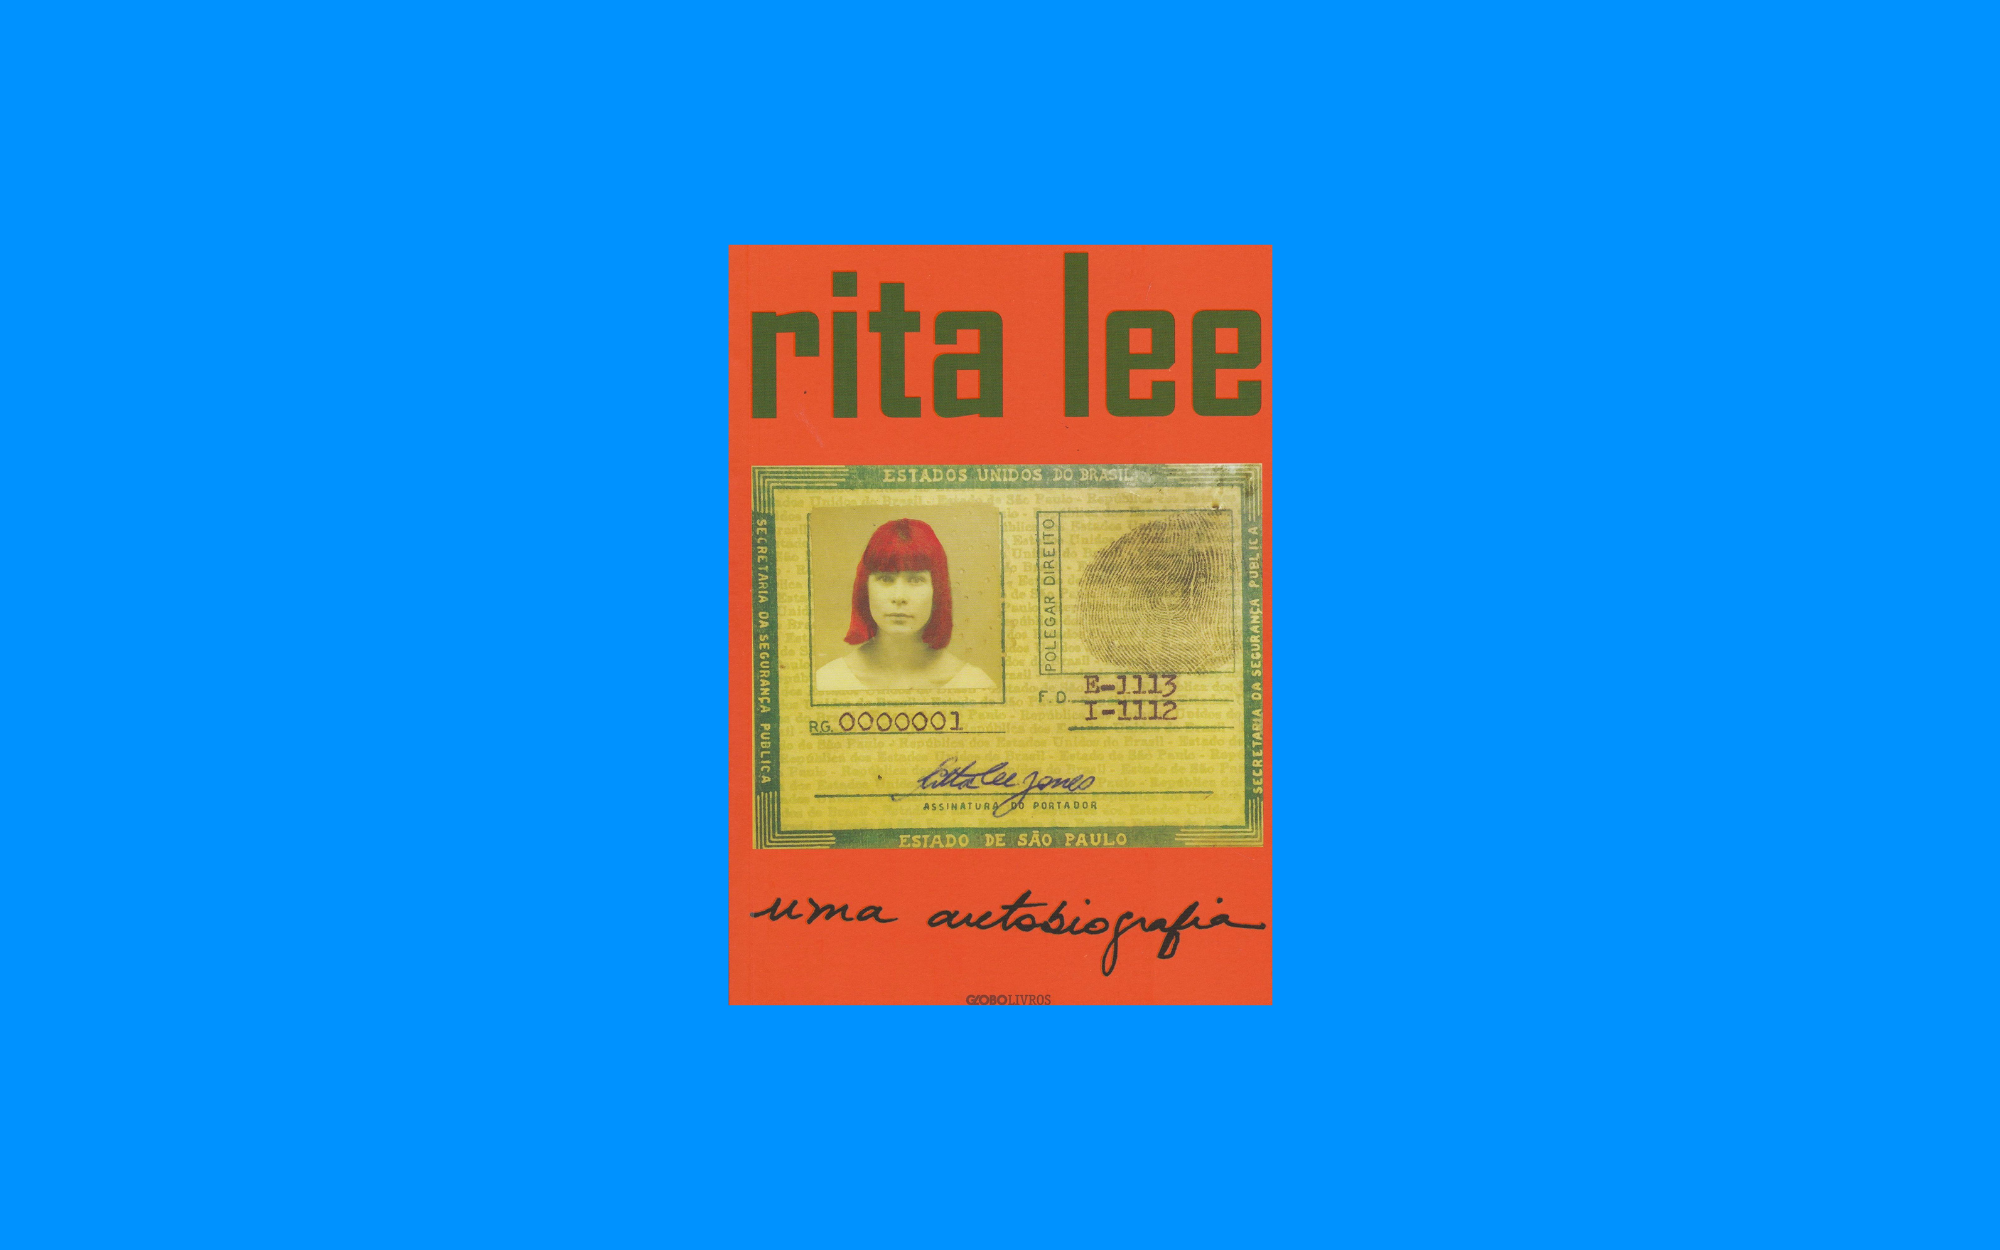 Capa da autobiografia de Rita Lee